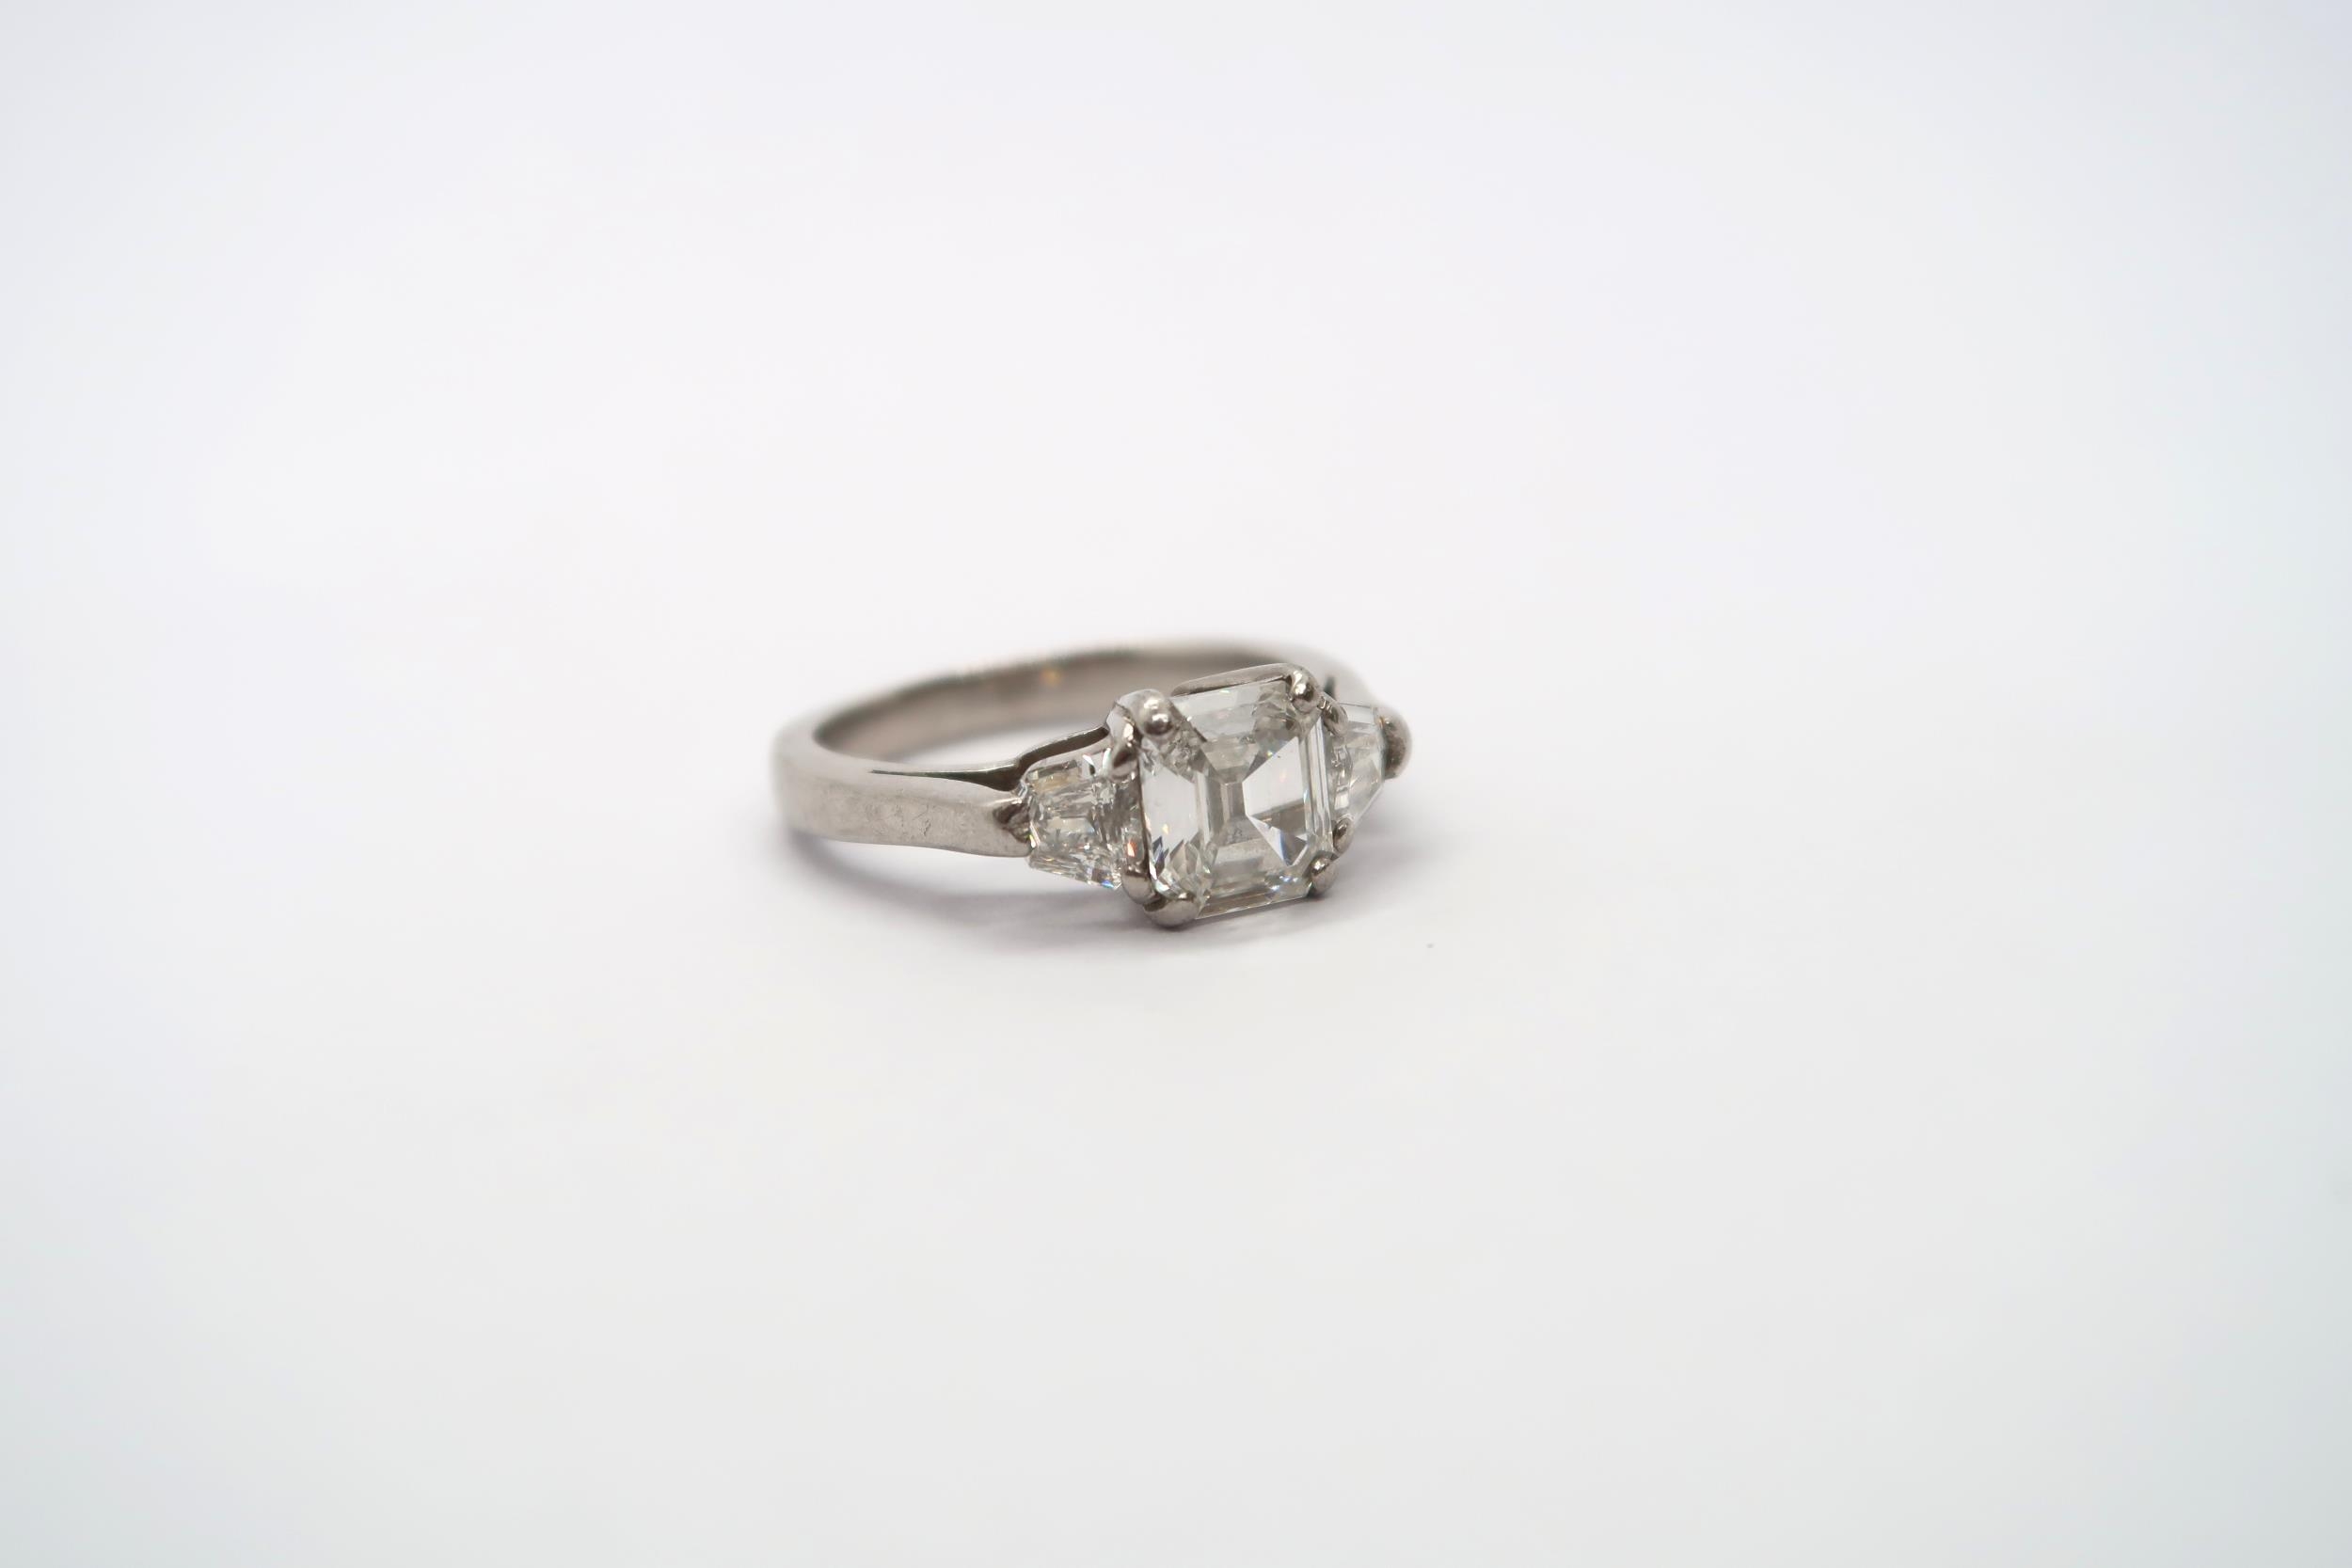 A very good platinum three stone diamond ring - The square emerald cut diamond estimated 1.1ct - Image 4 of 11